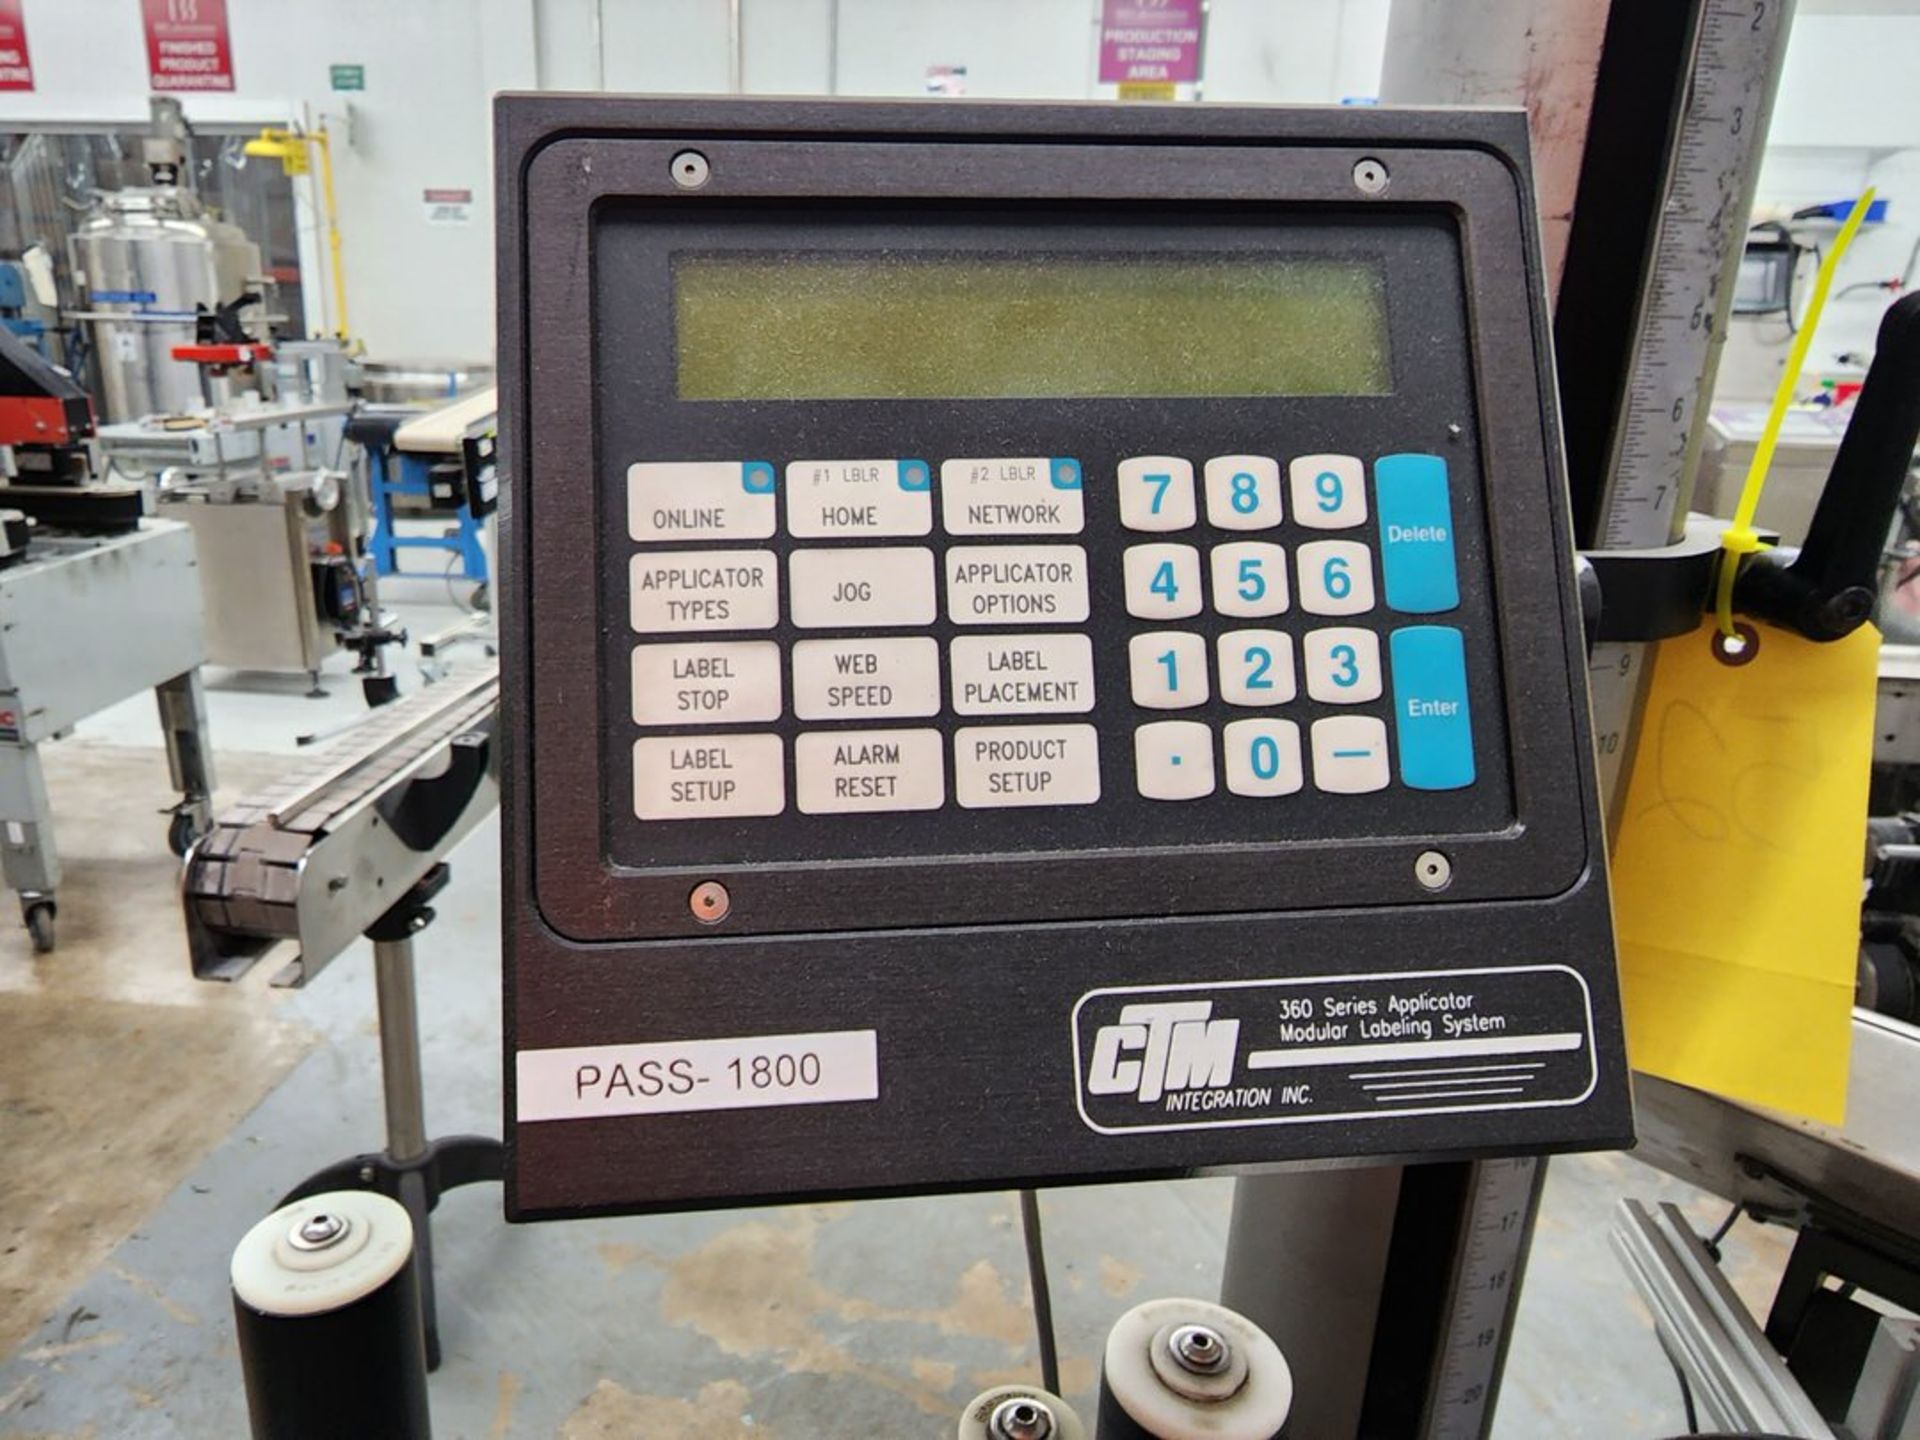 Trapani Labeling Machine 115v; W/ Contrex Controller; W/ CTM 360 Series Applicator Modular - Image 7 of 29